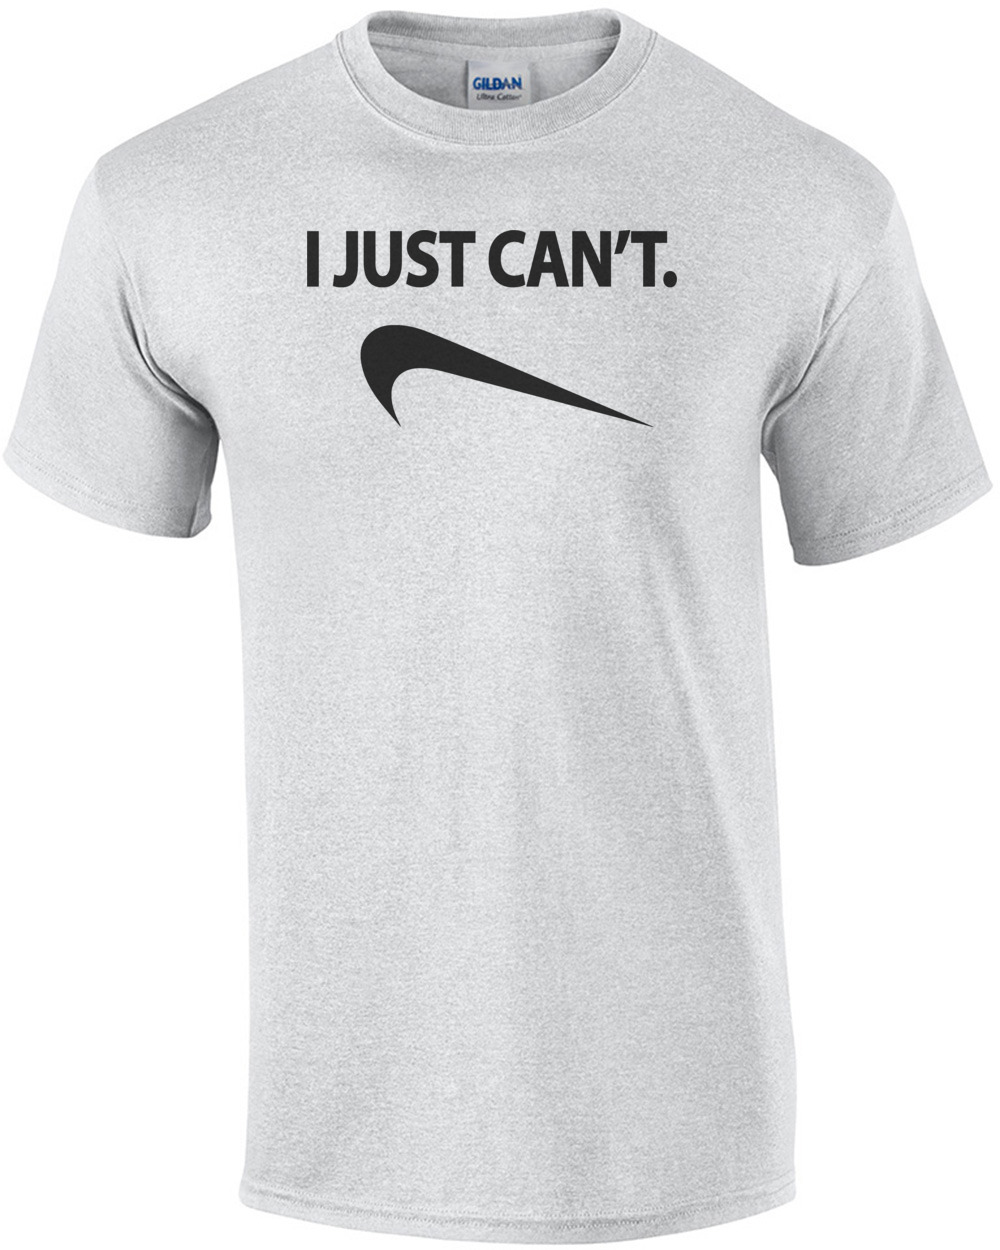 I Just Can't. Nike Parody T-Shirt shirt